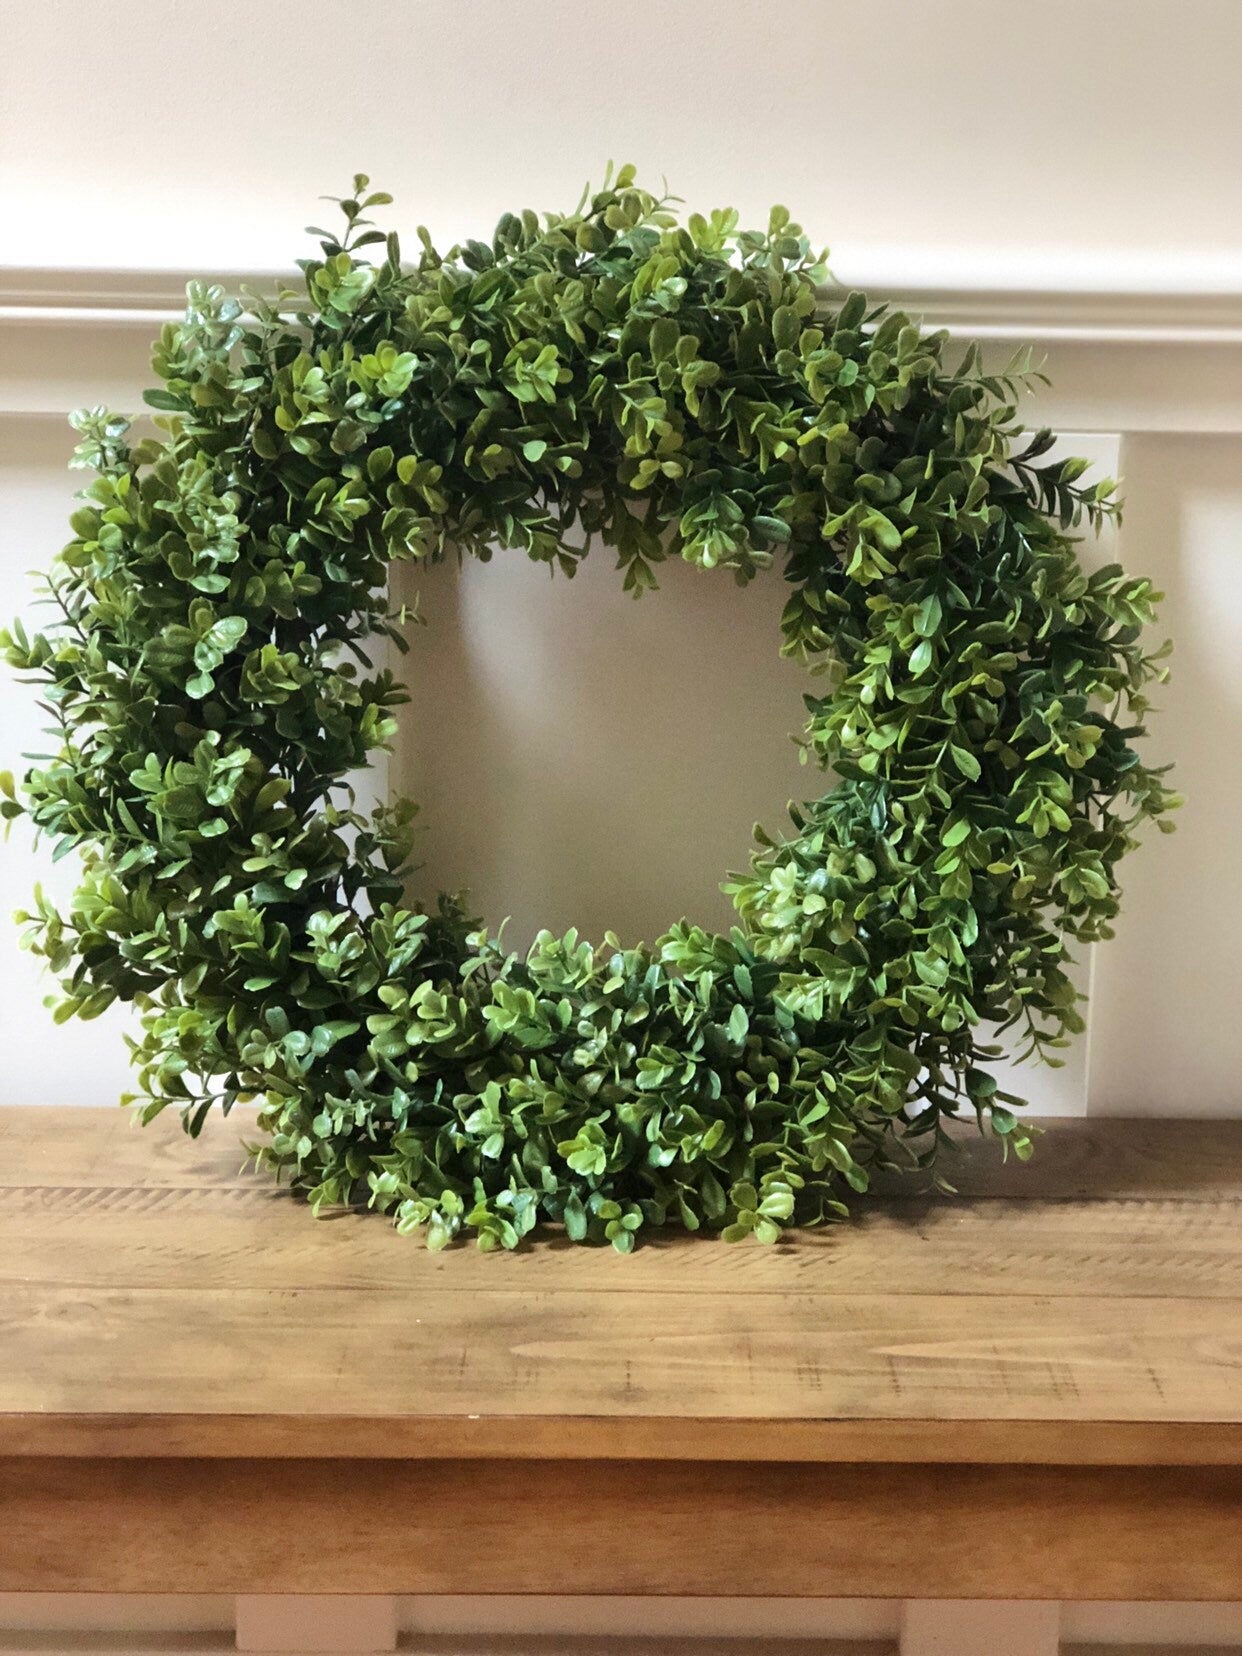 SALE,Farmhouse Wreath, Boxwood wreath, Wreath with initial, Green wreath, Personalized wreath,Housewarming gift, Fixer upper wreath